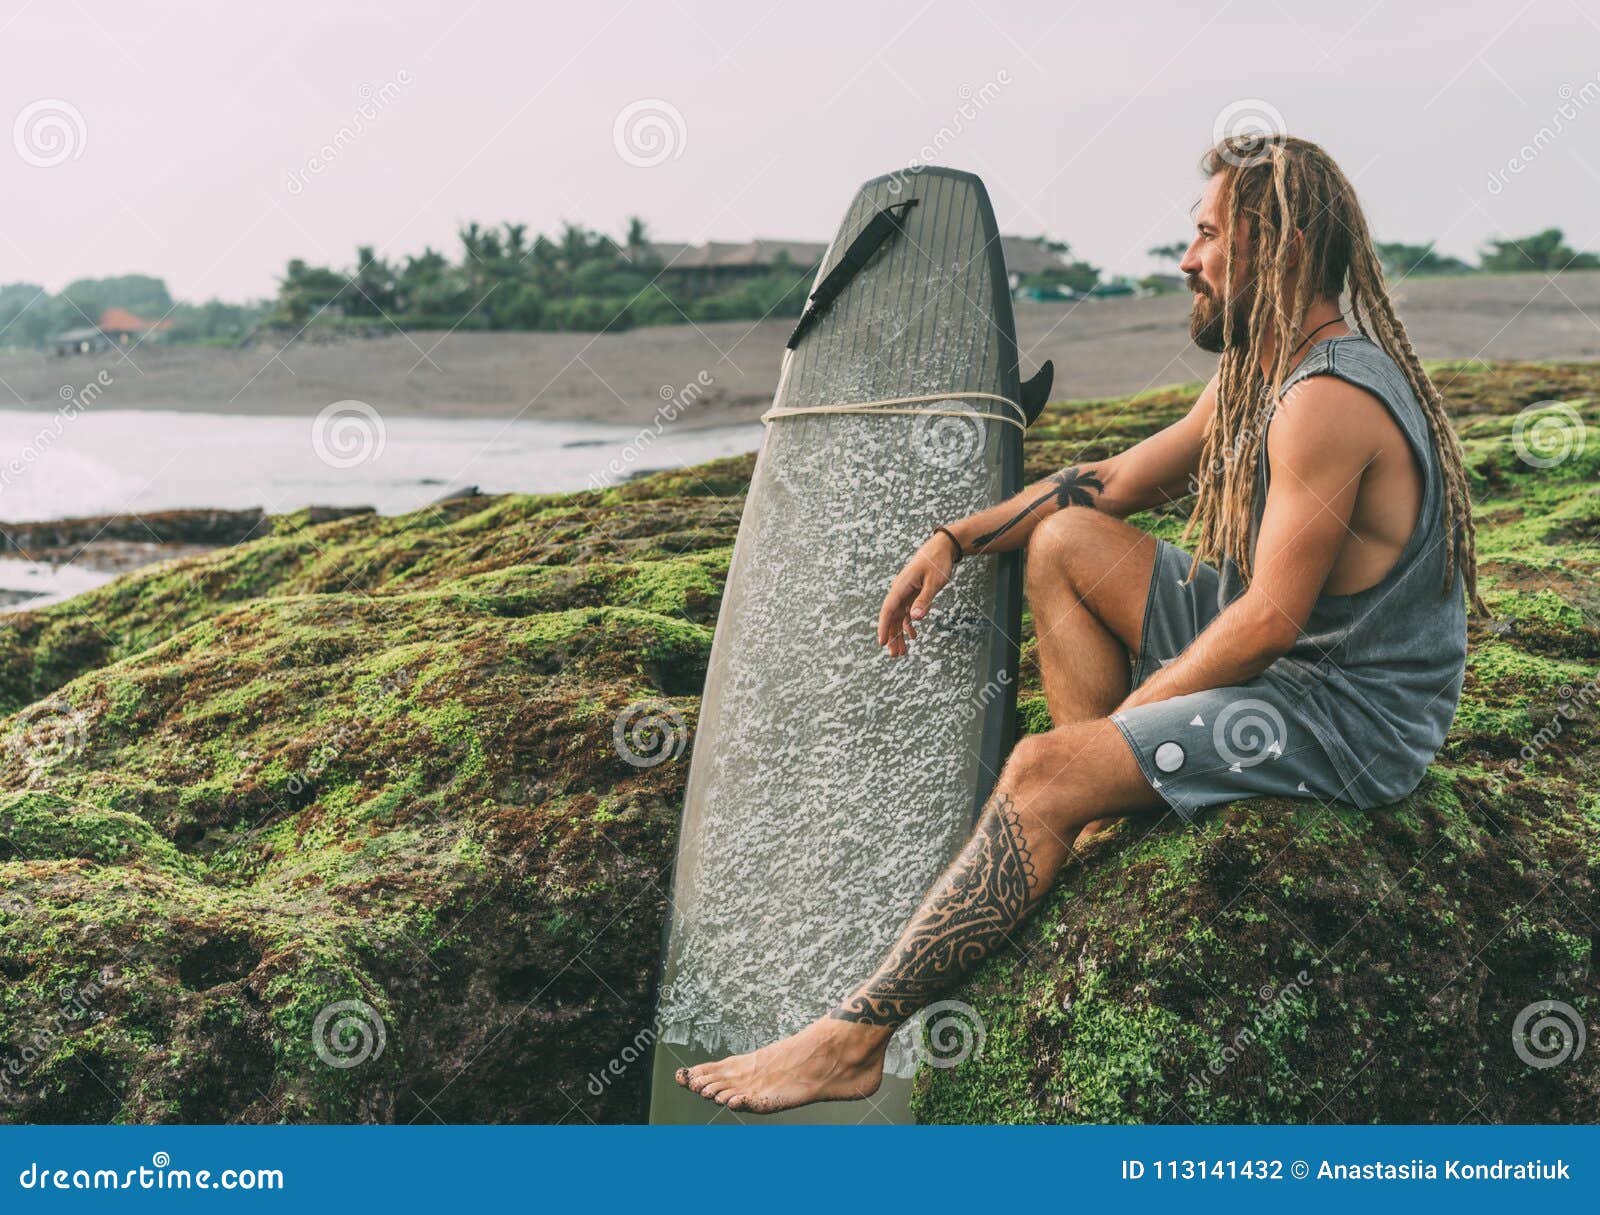 10 Seriously Strange Surf Tattoos  Mpora